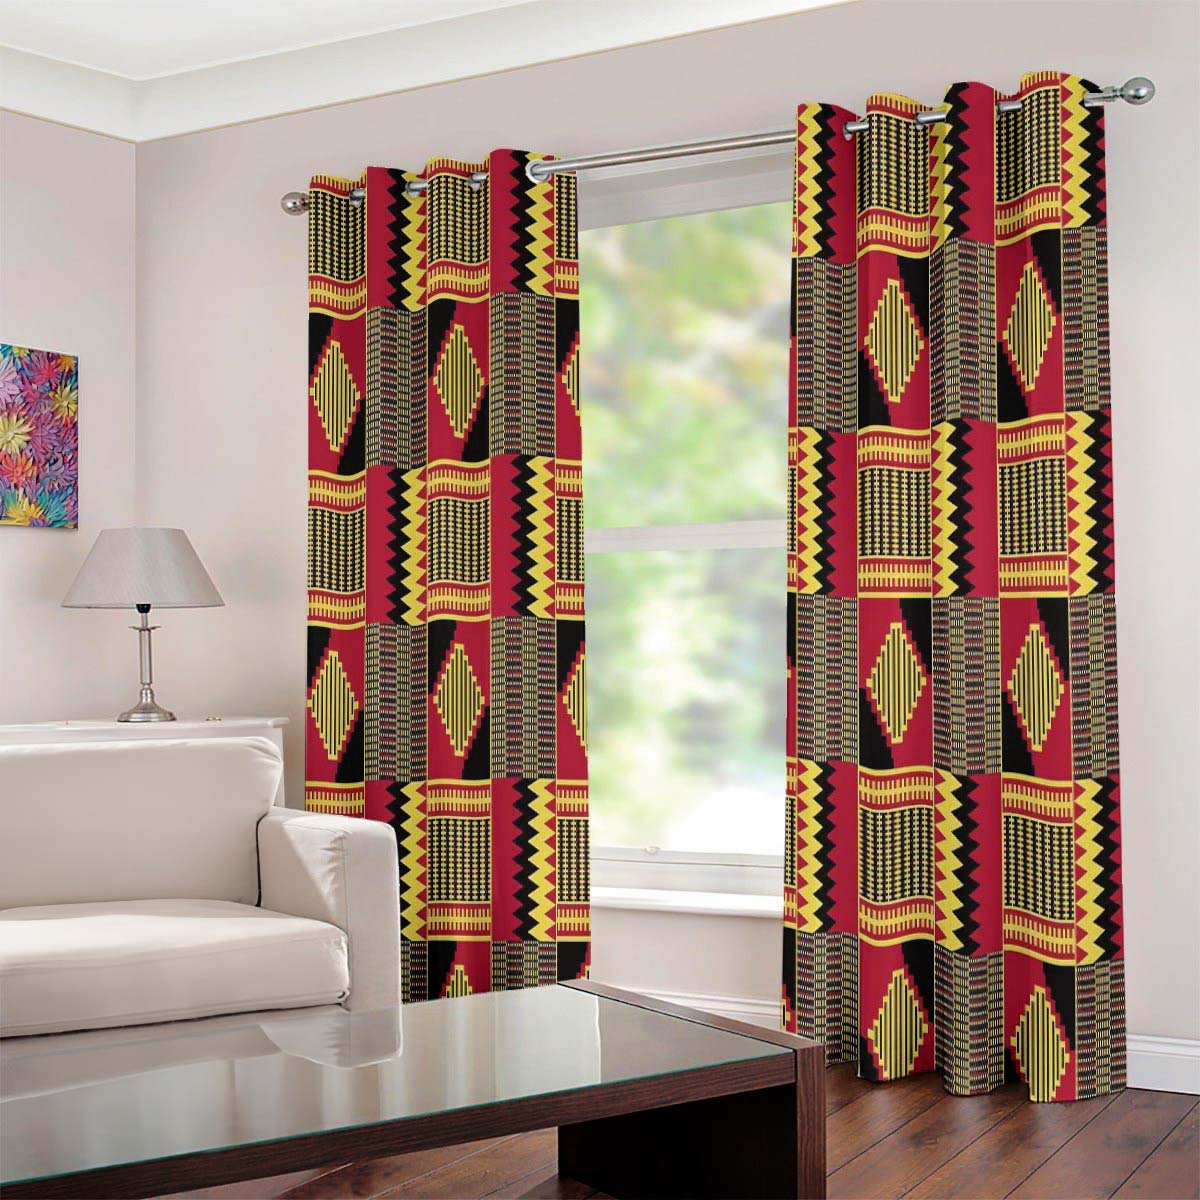 Kente Cloth Curtains in African Grommet Windows Design